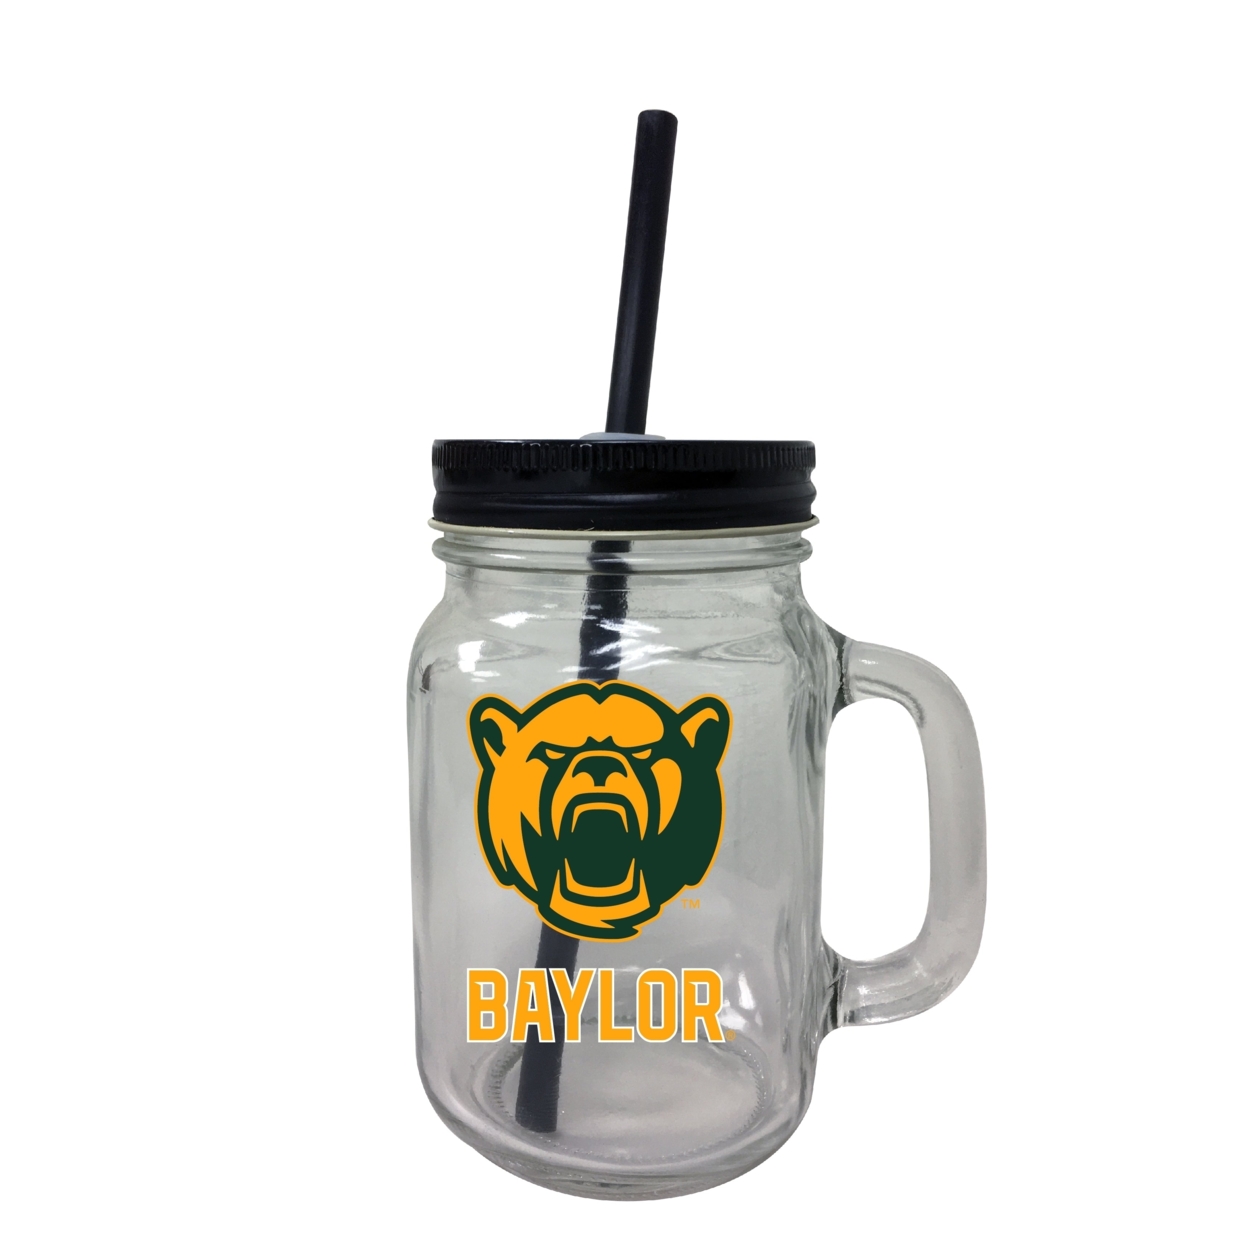 Baylor Bears Mason Jar Glass 2-Pack